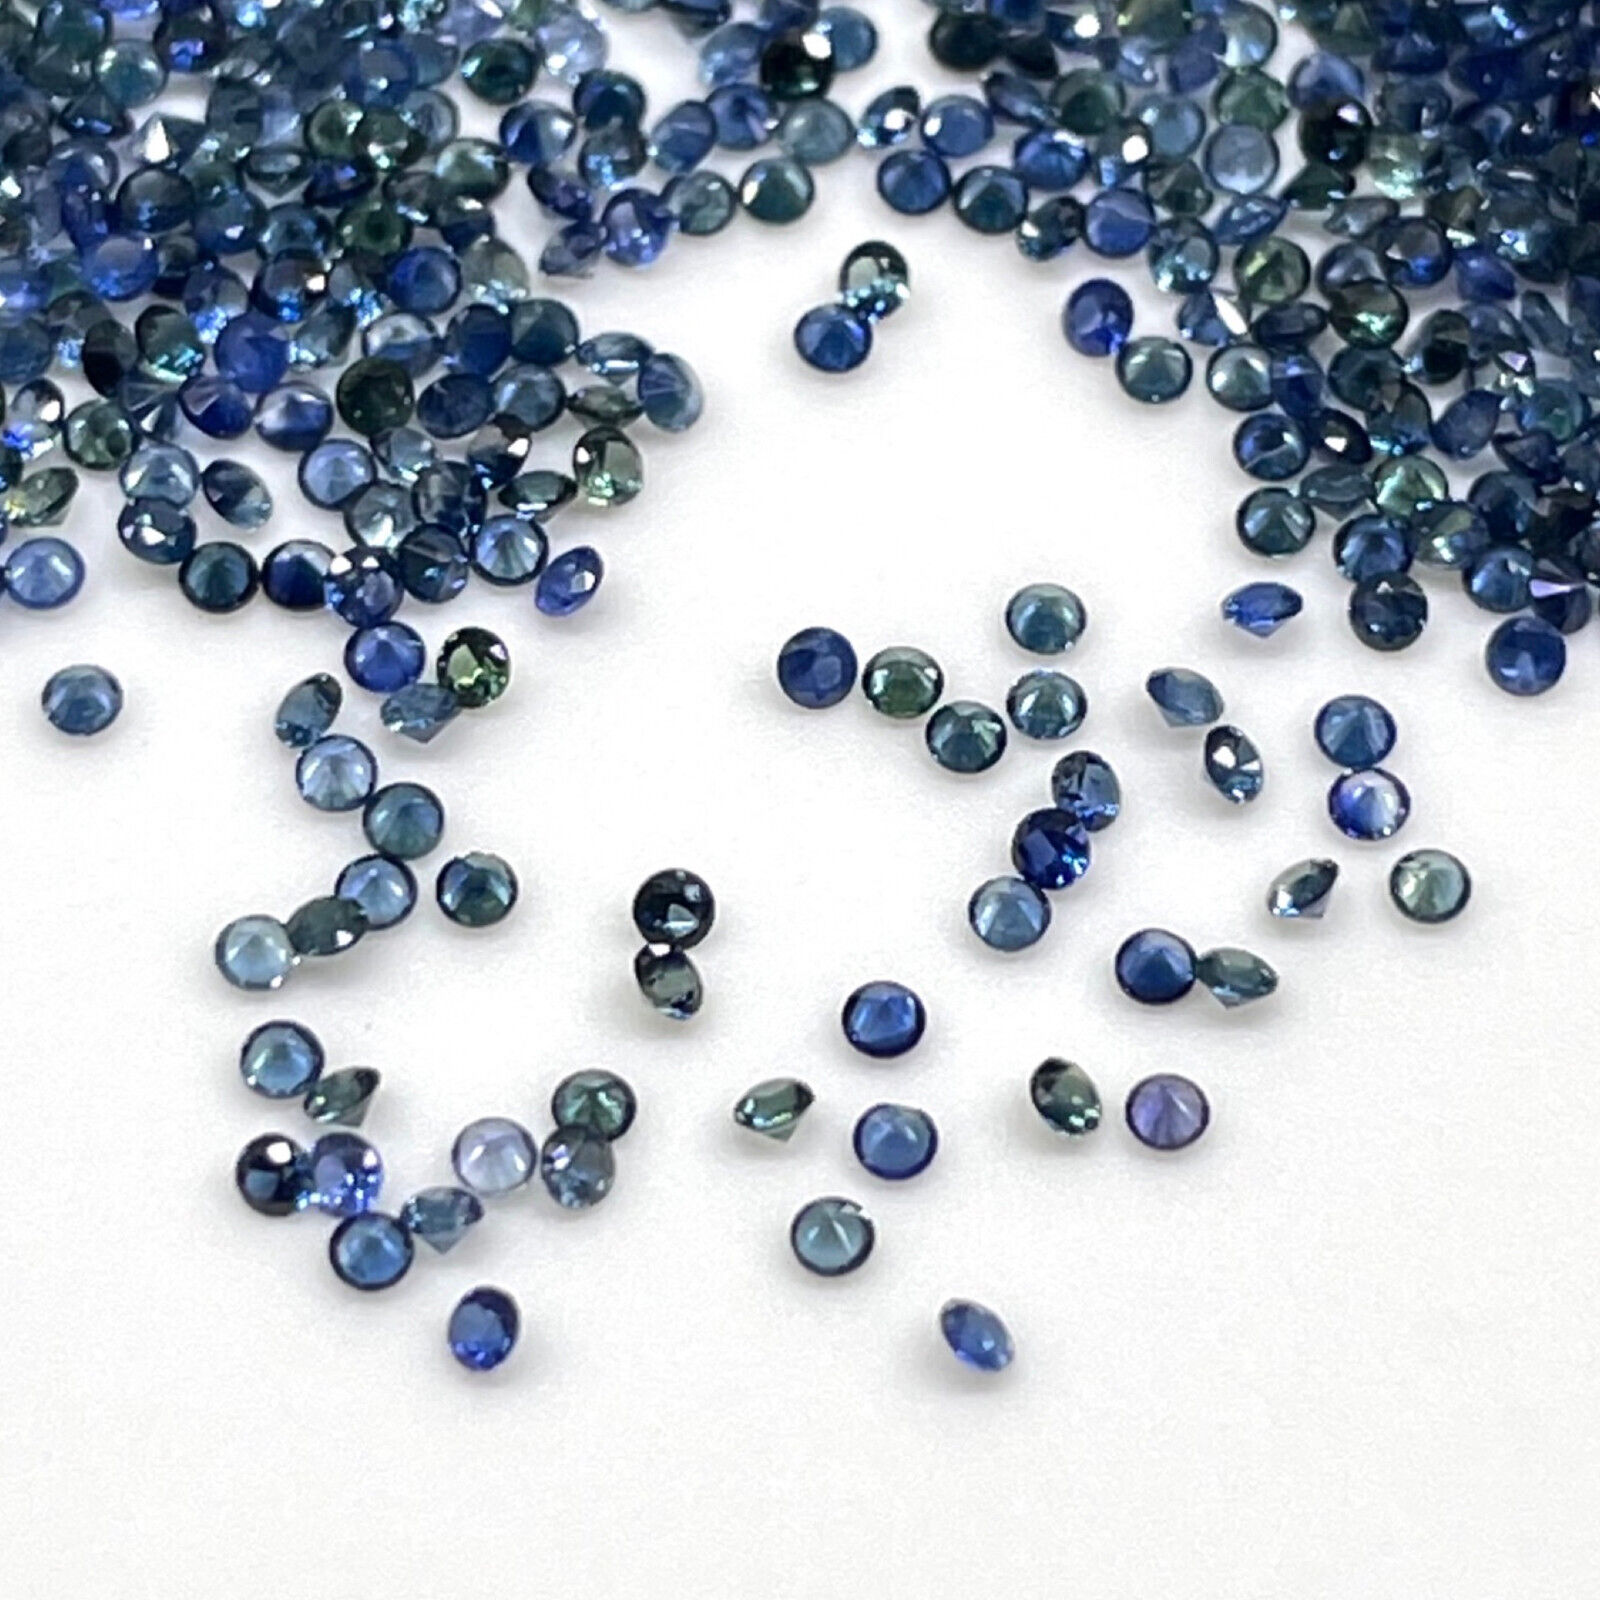 50 Pcs Natural Rich Blue Sapphire 1mm Round Cut Calibrated Loose Gemstones Lot Selene Gems - фотография #4